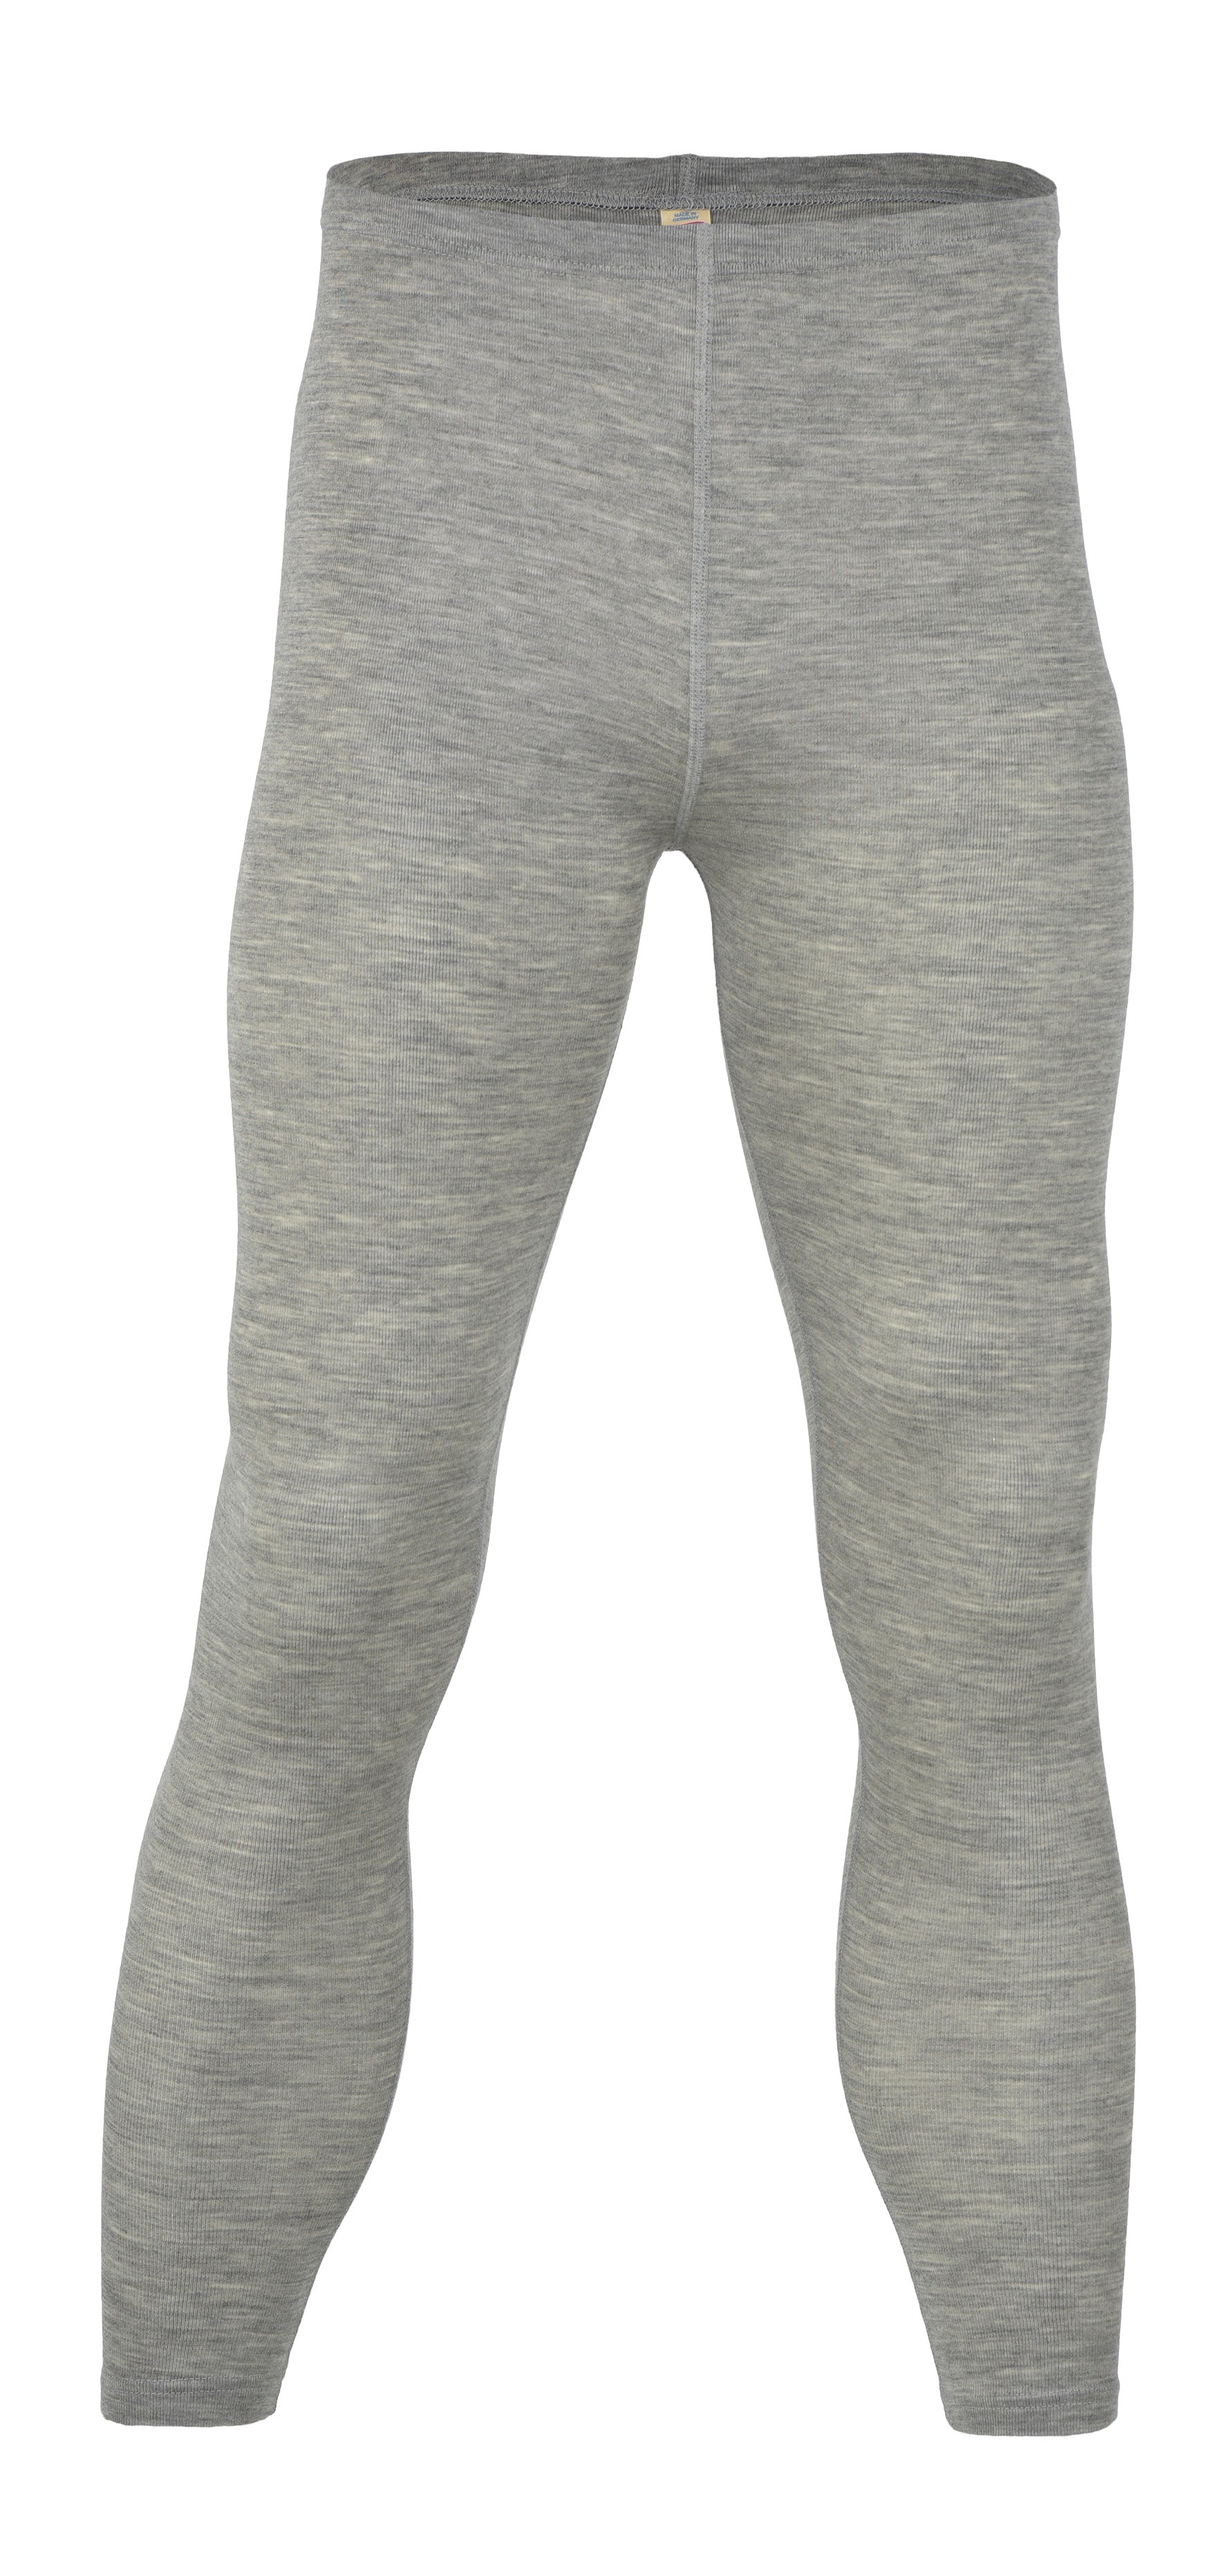 ENGEL - Men's Thermal Underwear Long Johns Leggings, 70% Organic Merino  Wool 30% Silk